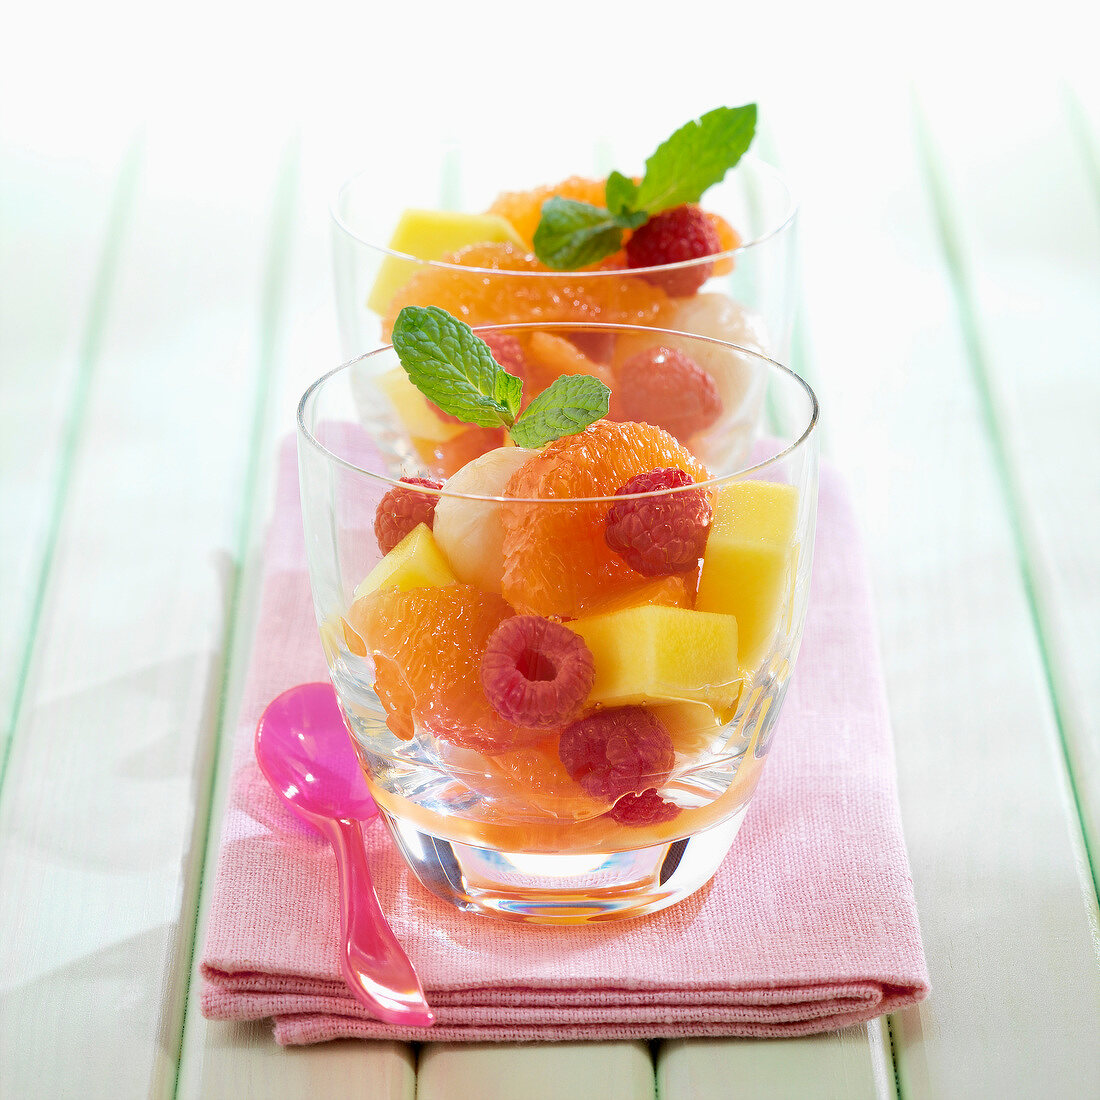 Grapefruit,lychee,raspberry and mango fruit salad with honey